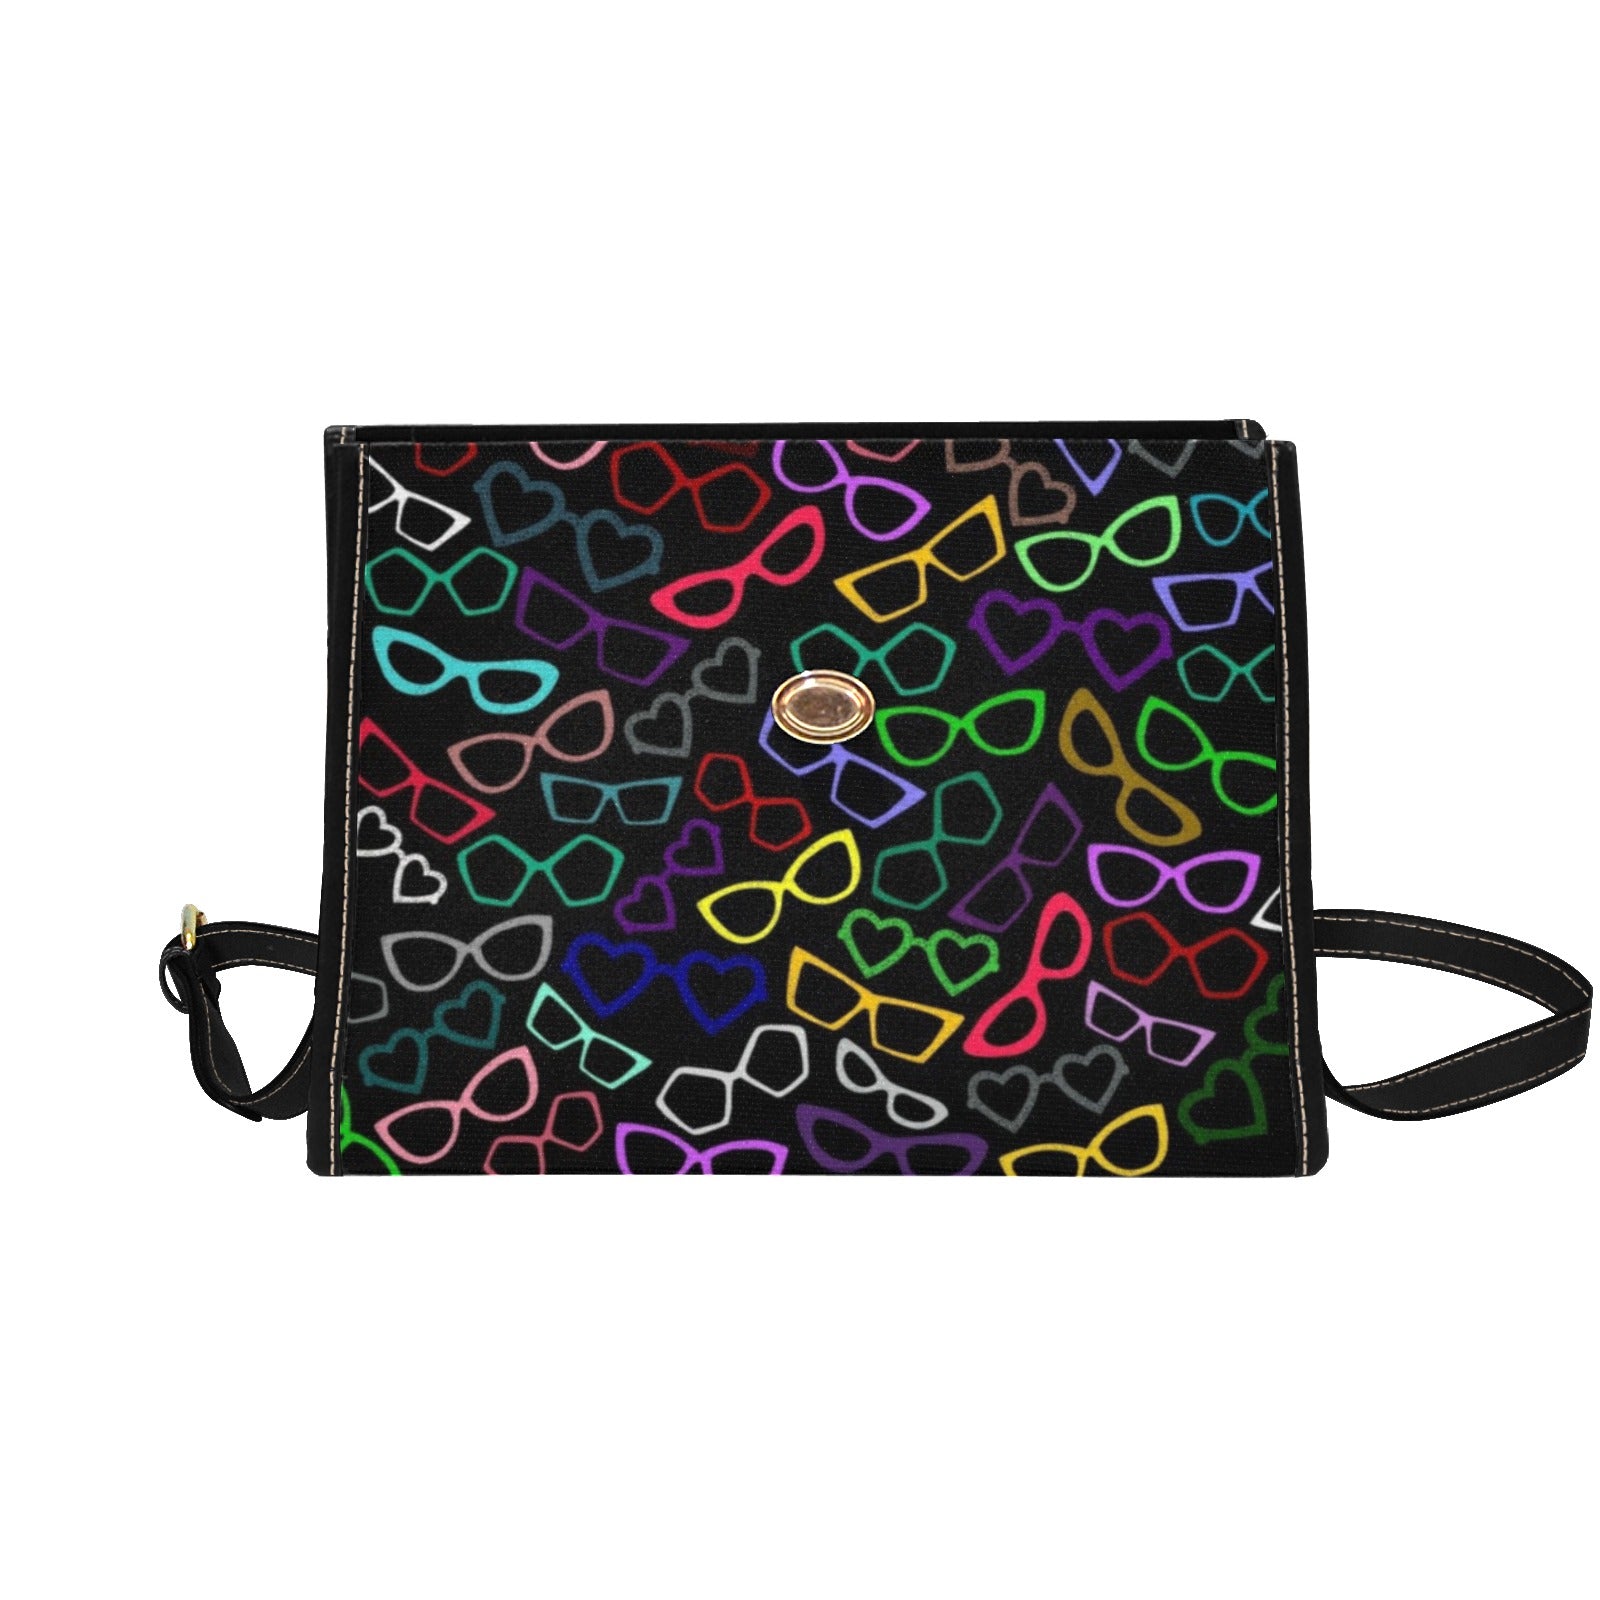 Glasses - Waterproof Canvas Handbag